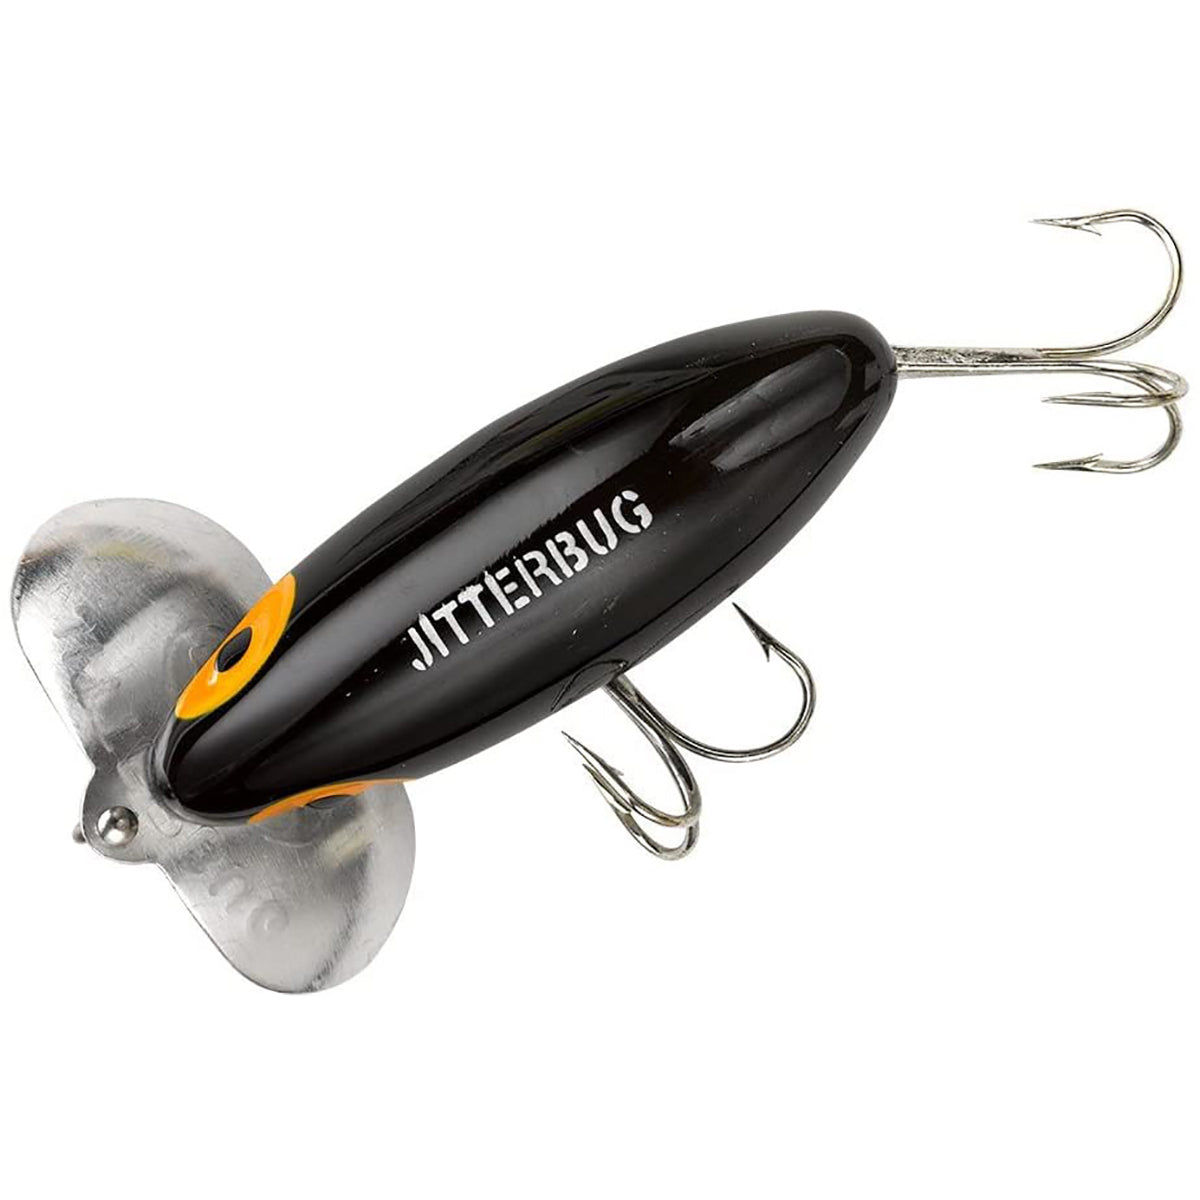 Arbogast Jitterbug Clicker 1/4 oz. Topwater Fishing Lure - Black Arbogast